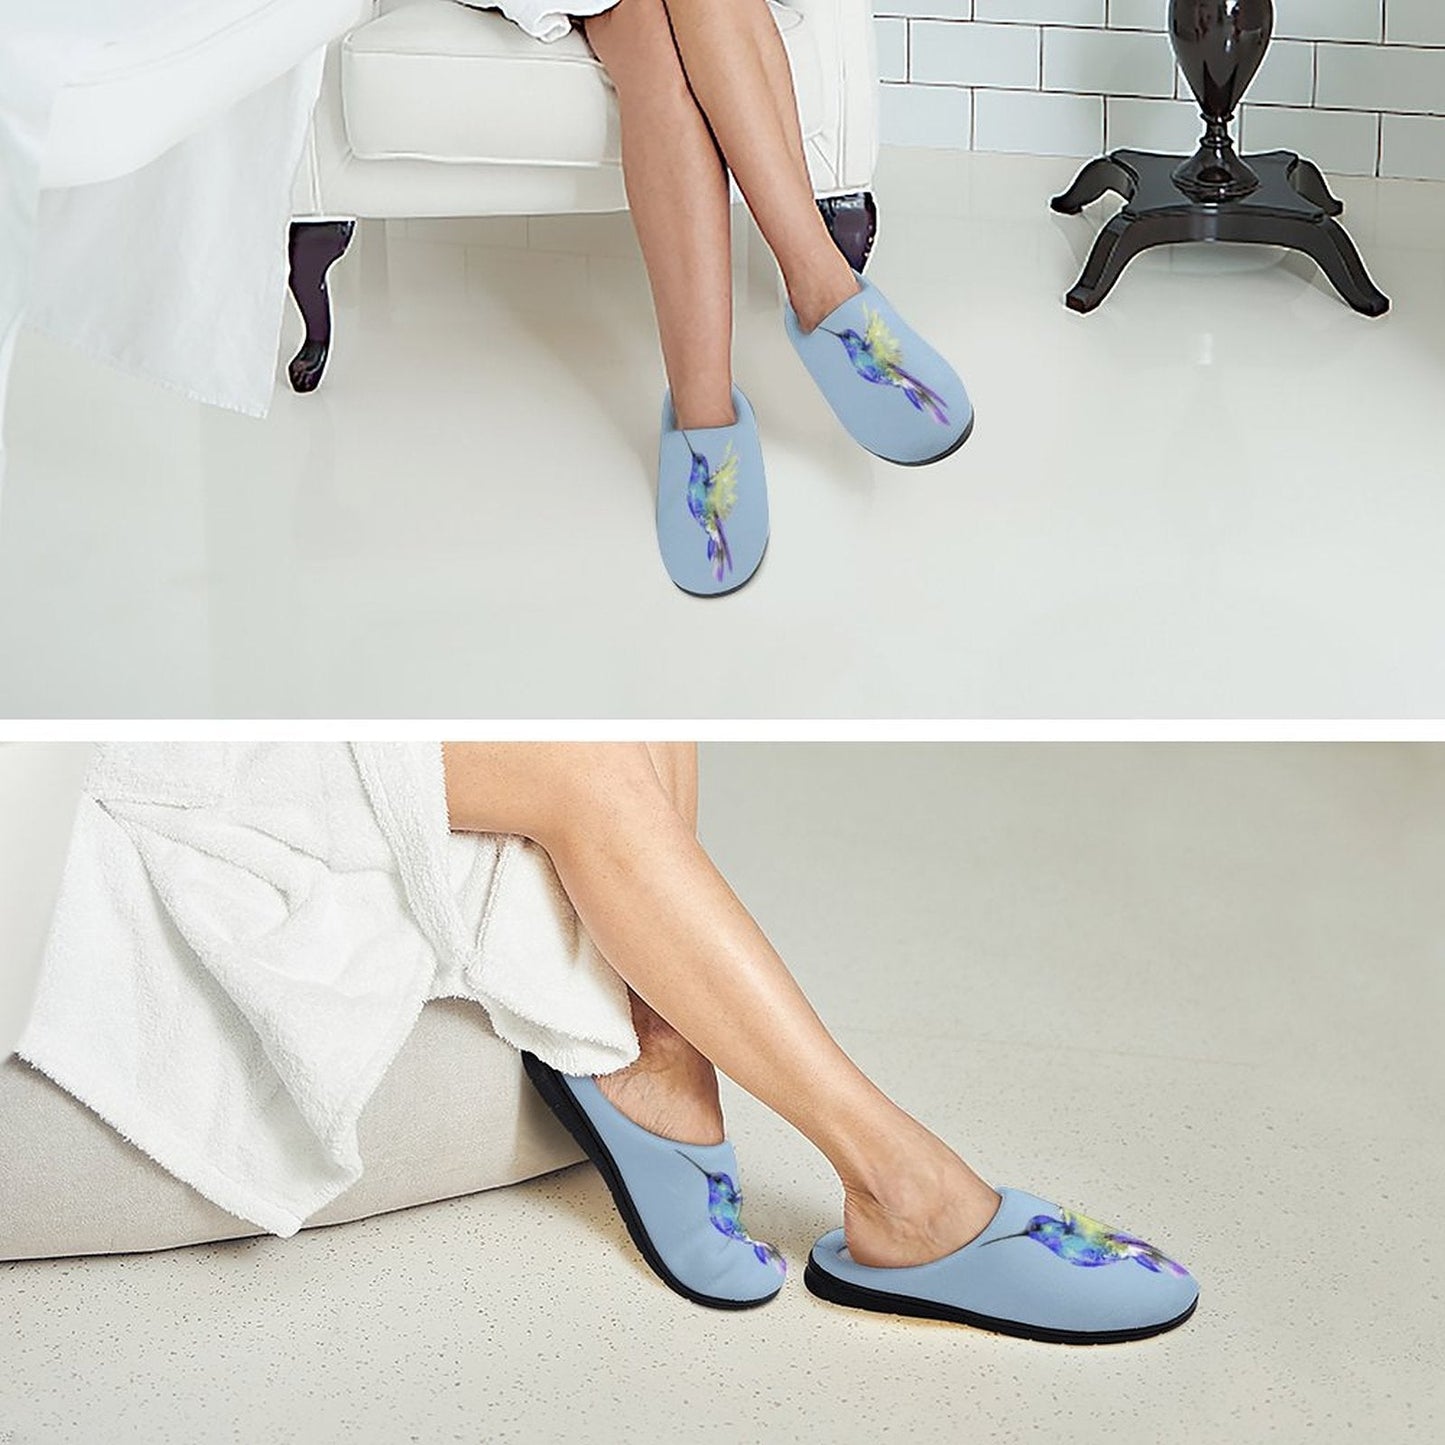 Flossie Hummingbird Custom Women's Cotton Slippers for Indoor Wear - Blue Cava